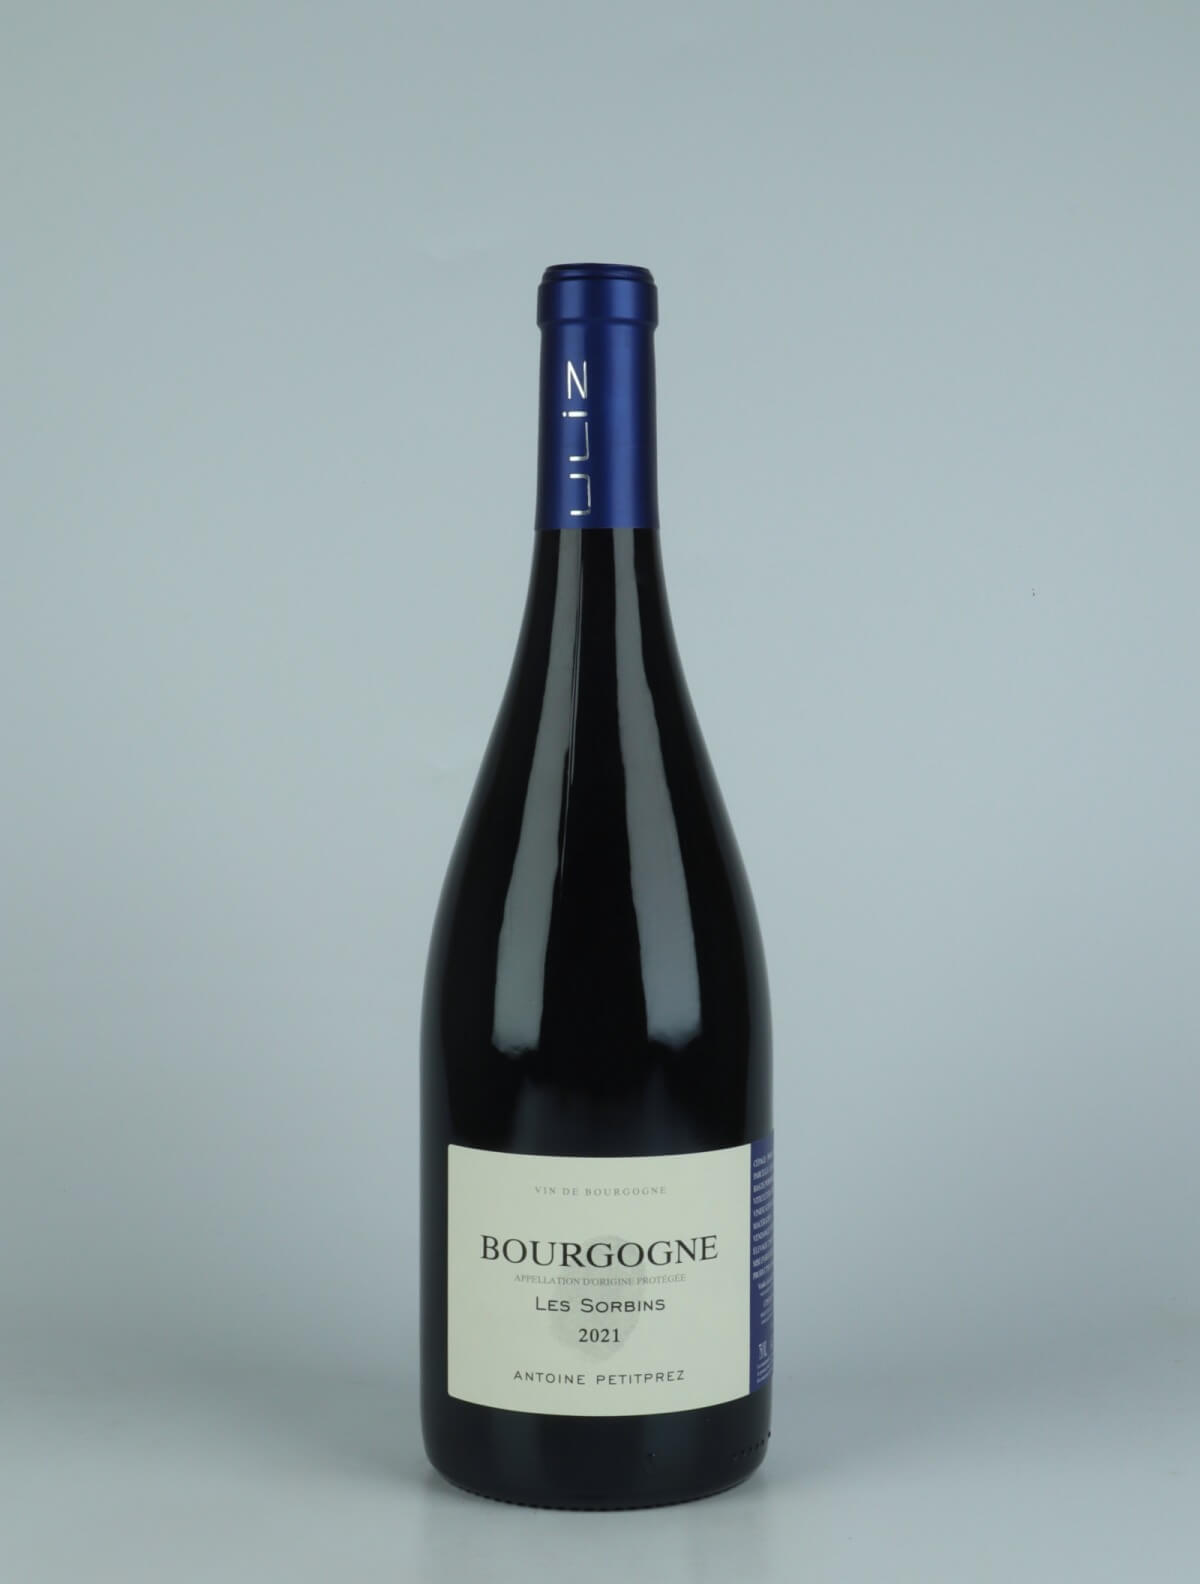 En flaske 2021 Bourgogne Rouge - Les Sorbins Rødvin fra Antoine Petitprez, Bourgogne i Frankrig